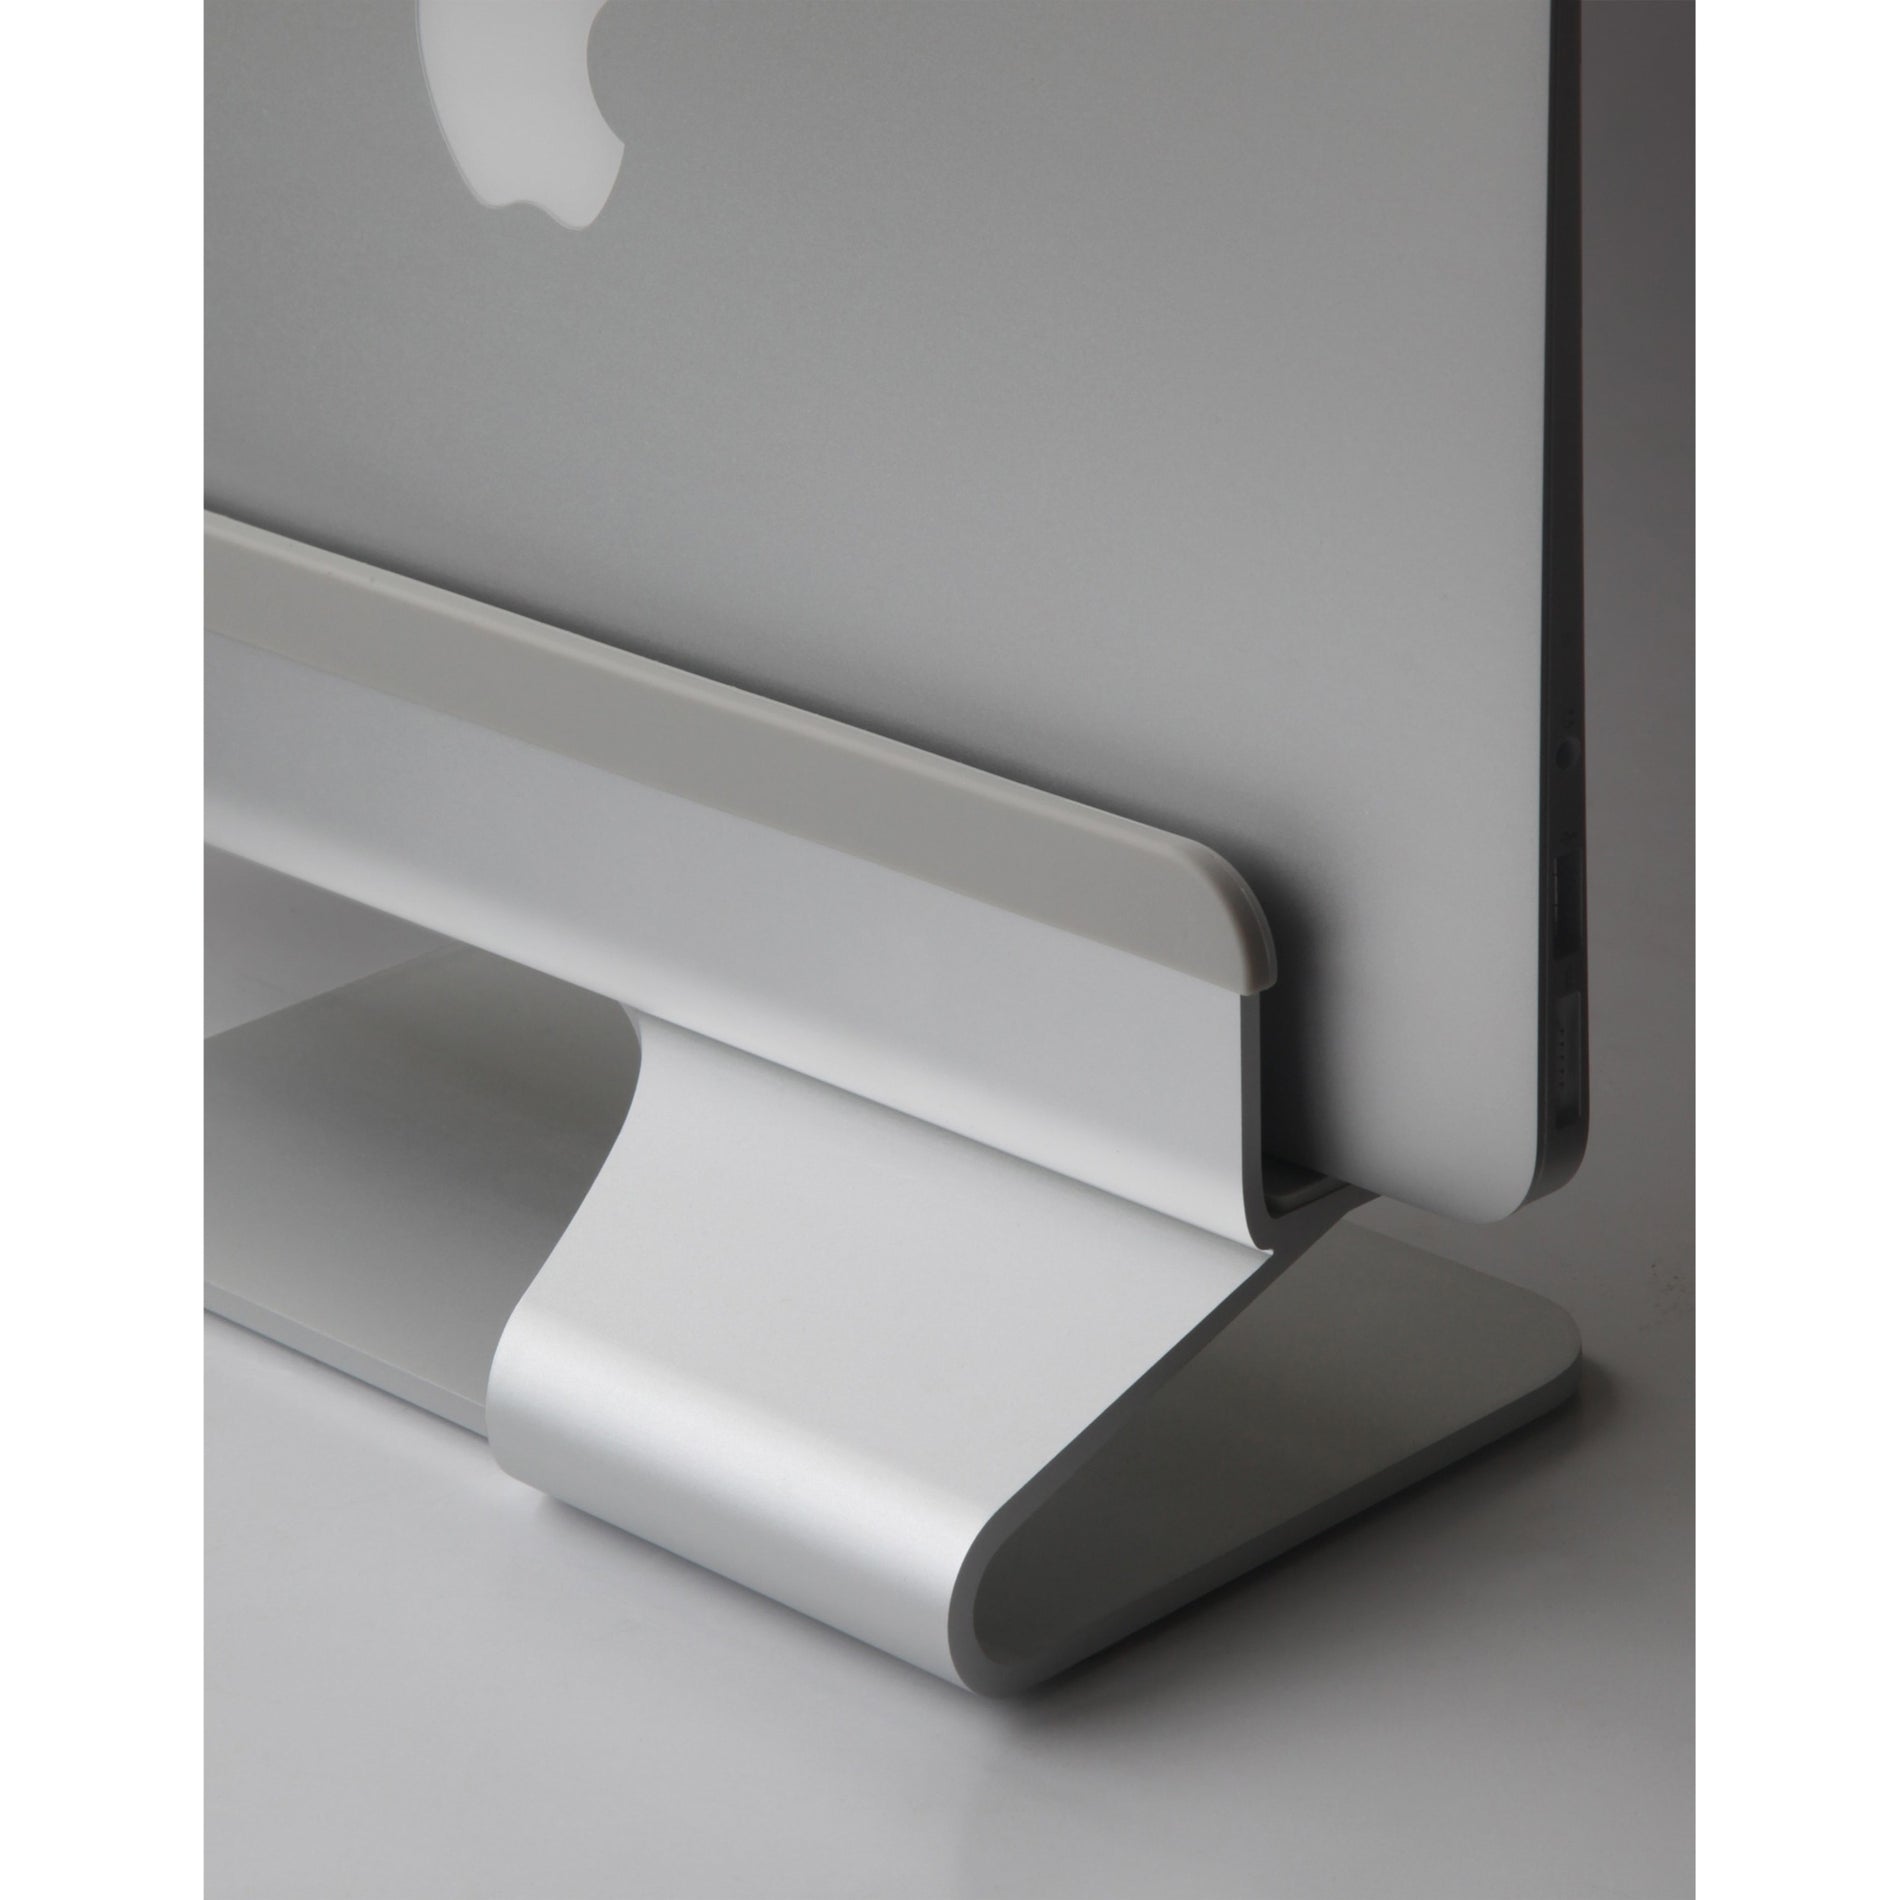 Rain Design 10037 mTower Vertical Laptop Stand - Silver, Aluminum Tablet PC Holder